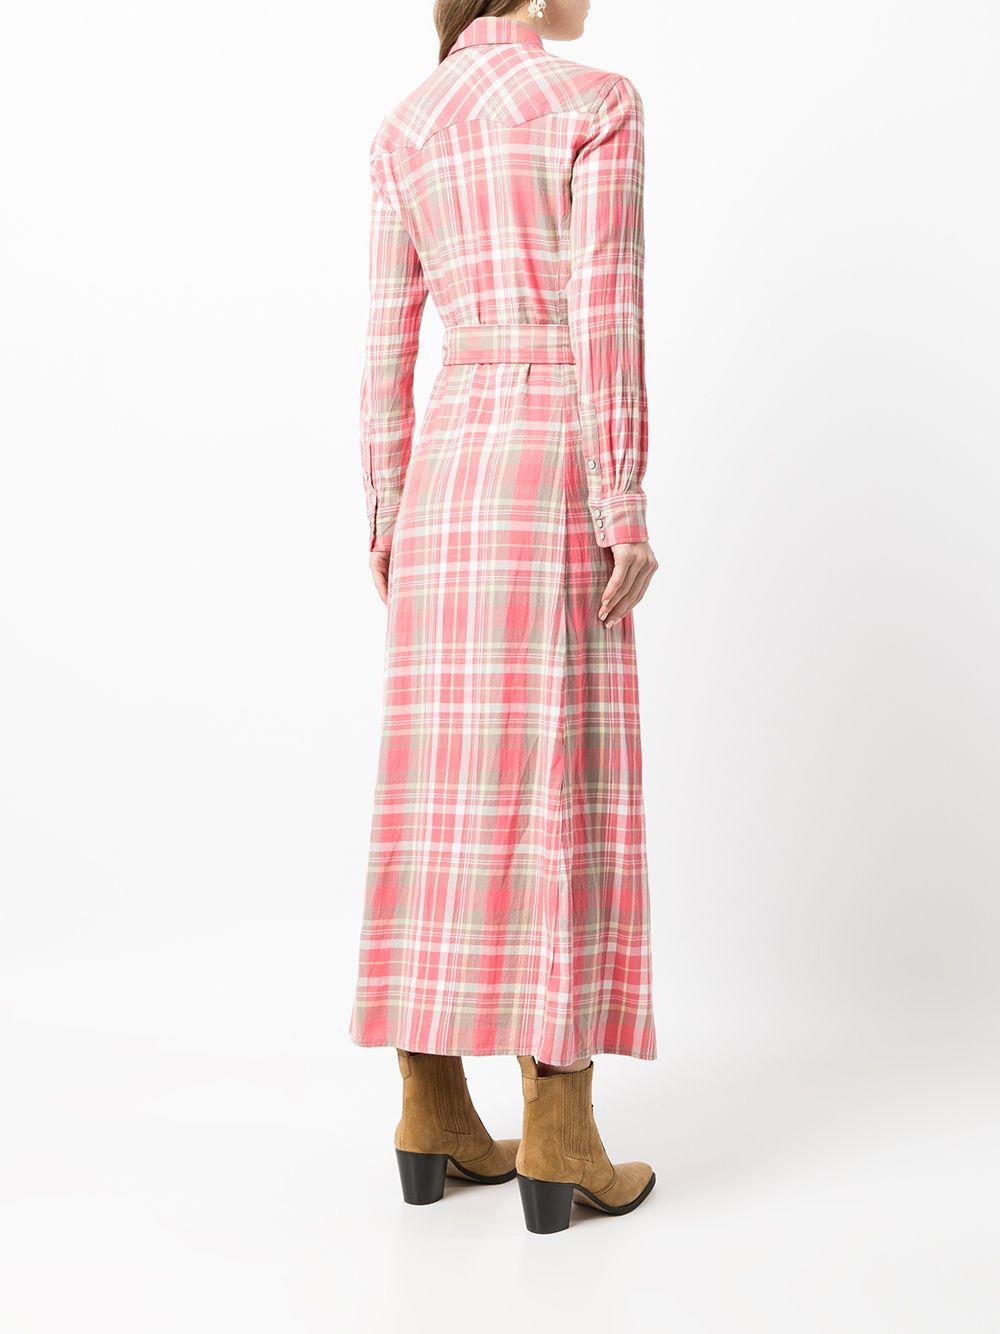 Polo Ralph Lauren Plaid Check Shirt Dress in Pink | Lyst